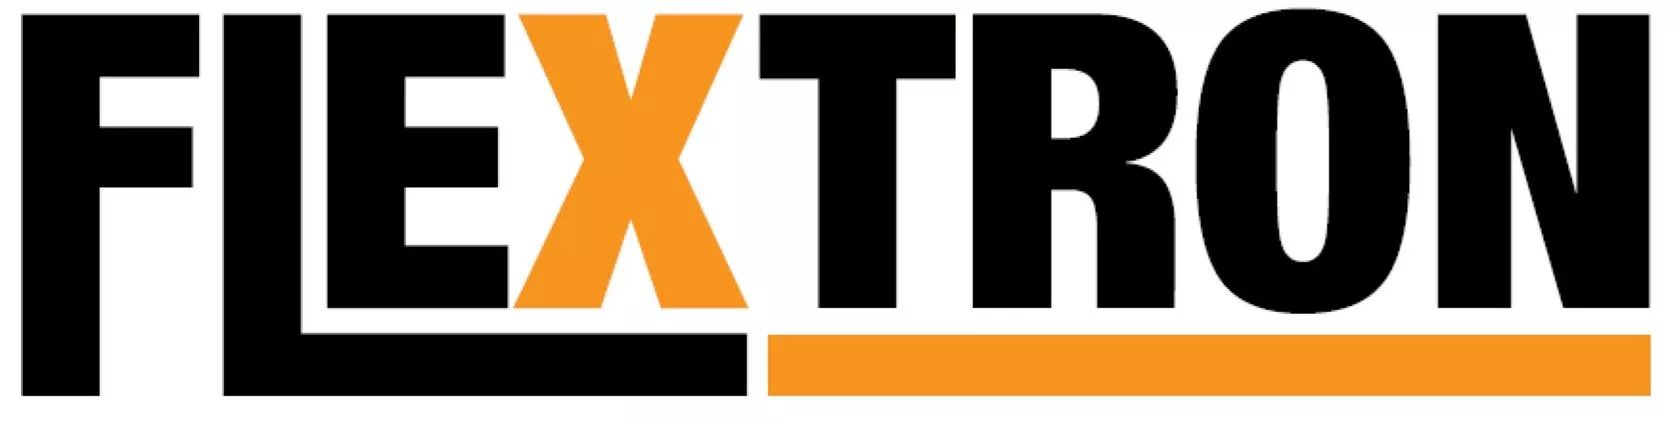 FLEXTRON logo